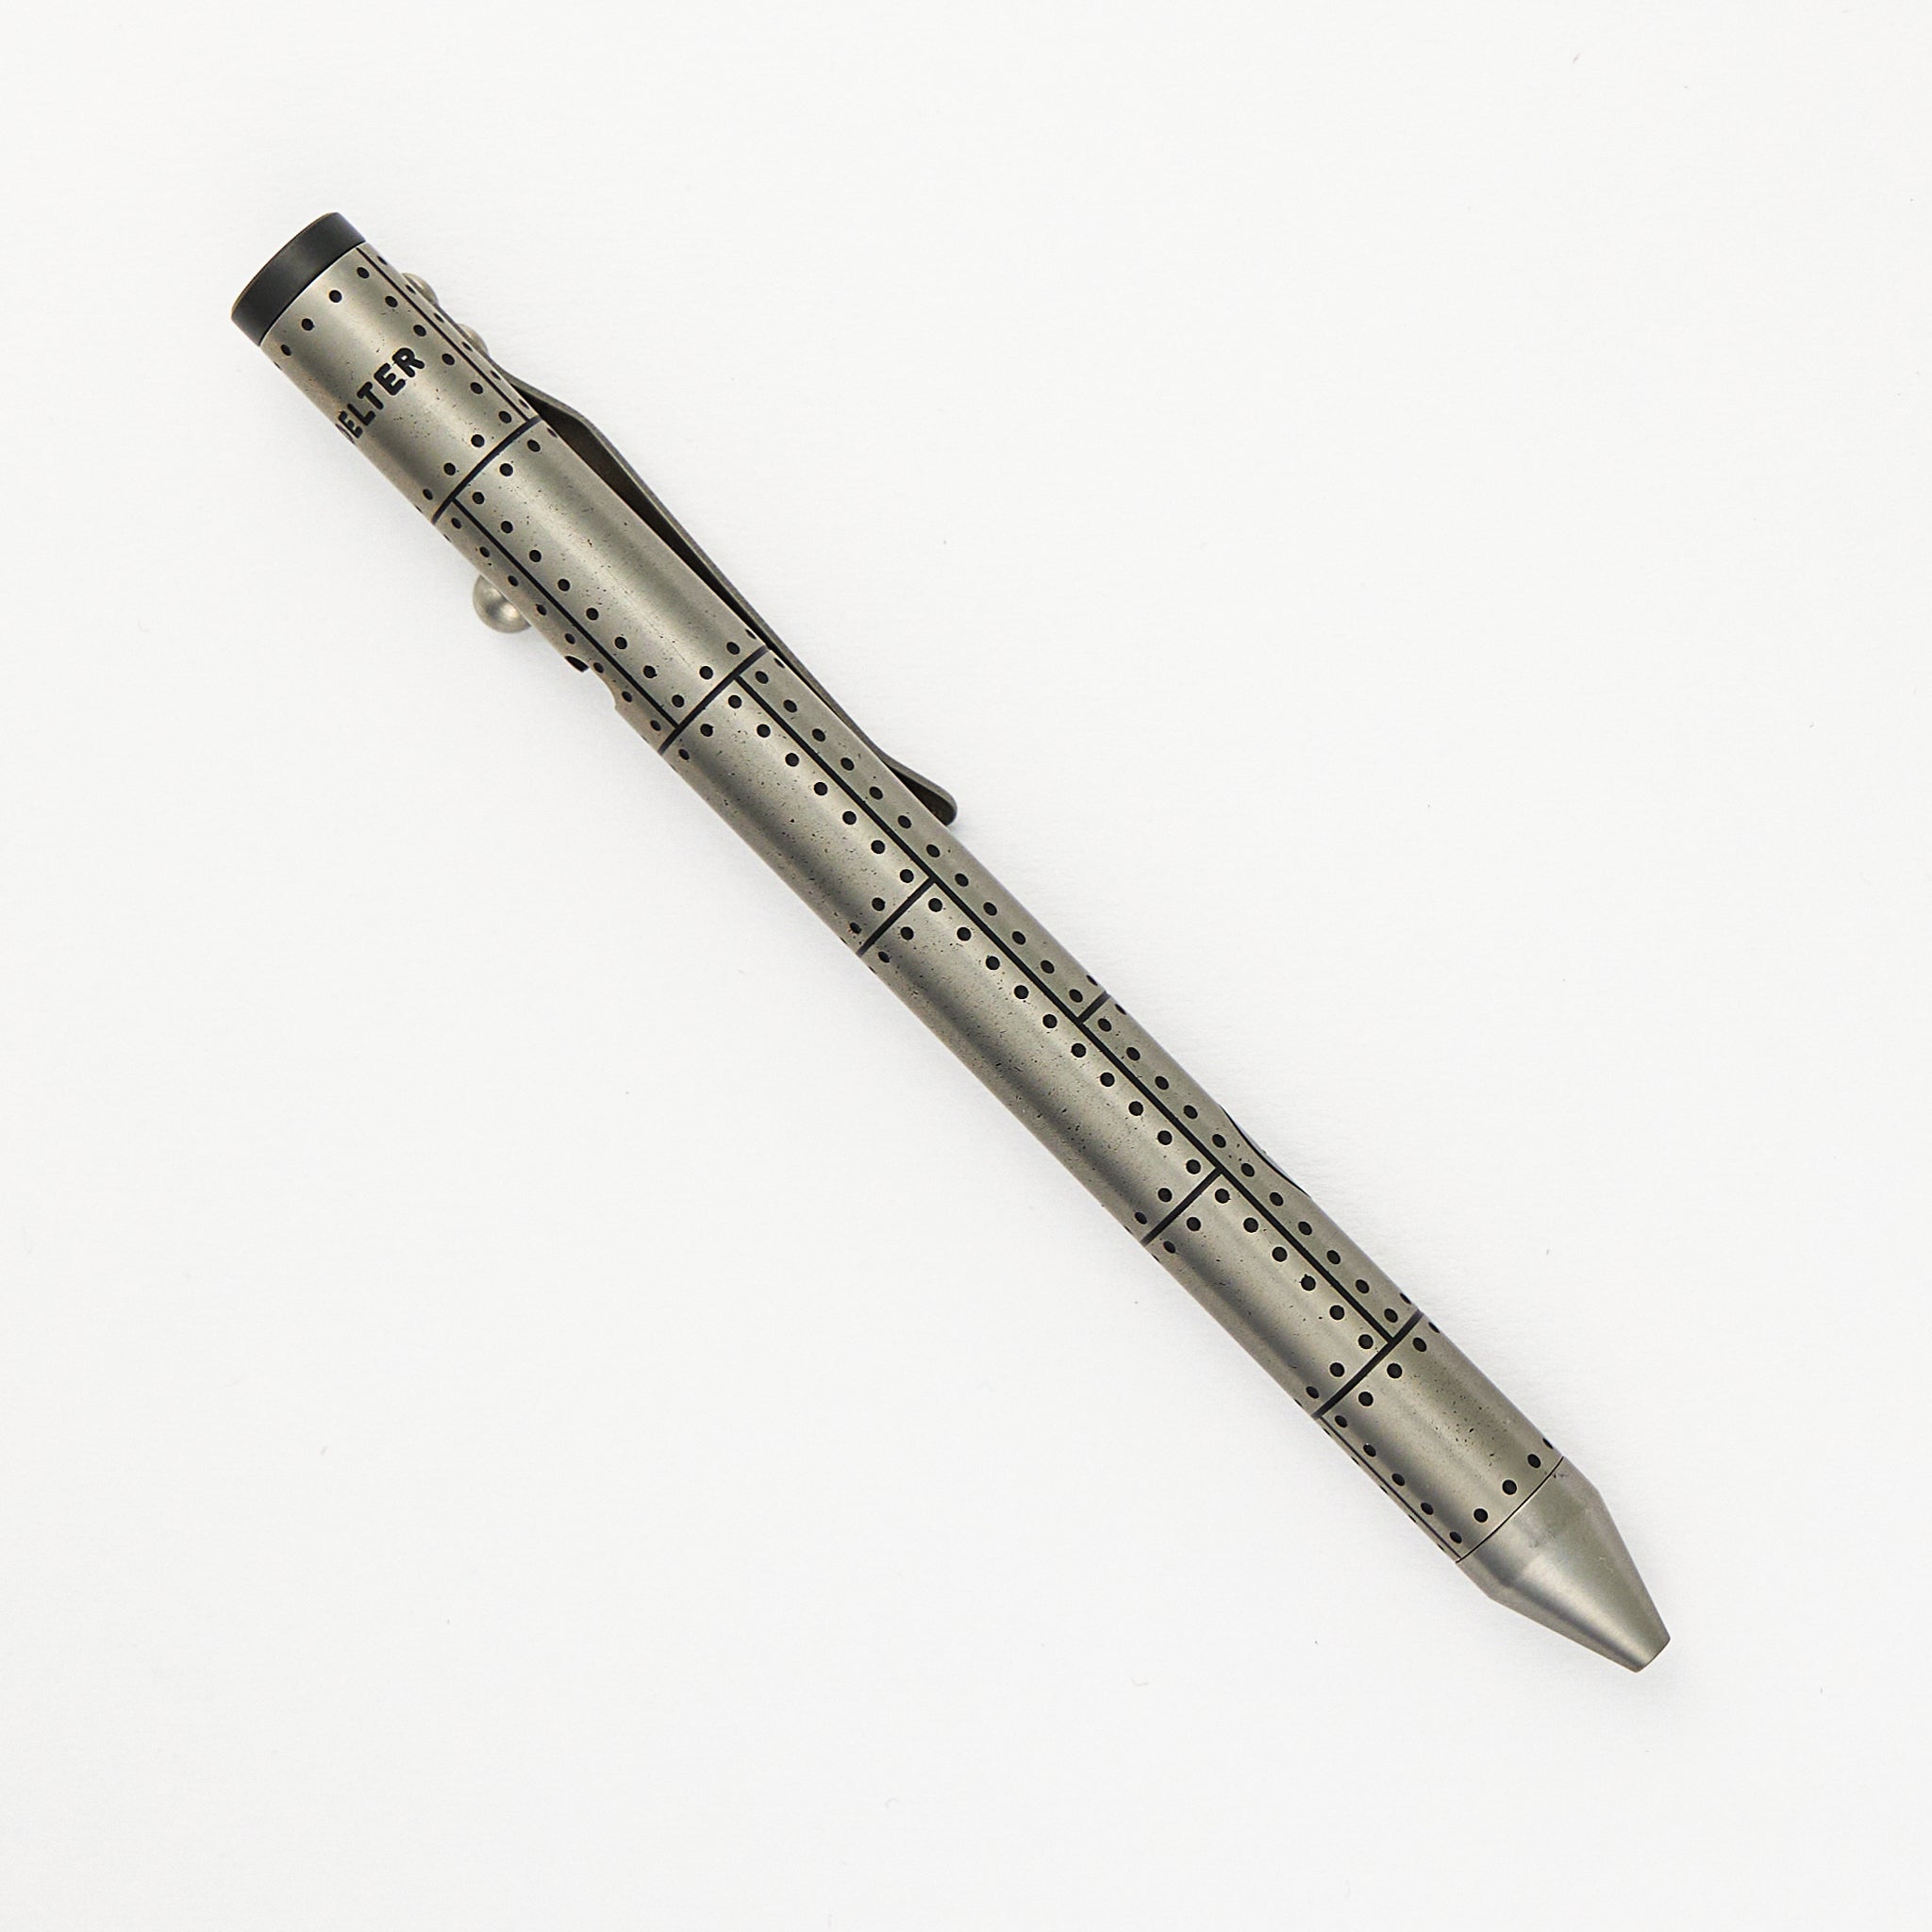 Fellhoelter/Cptn Axel Full Size TiBolt Pen - WW3 Tuxedo Titanium